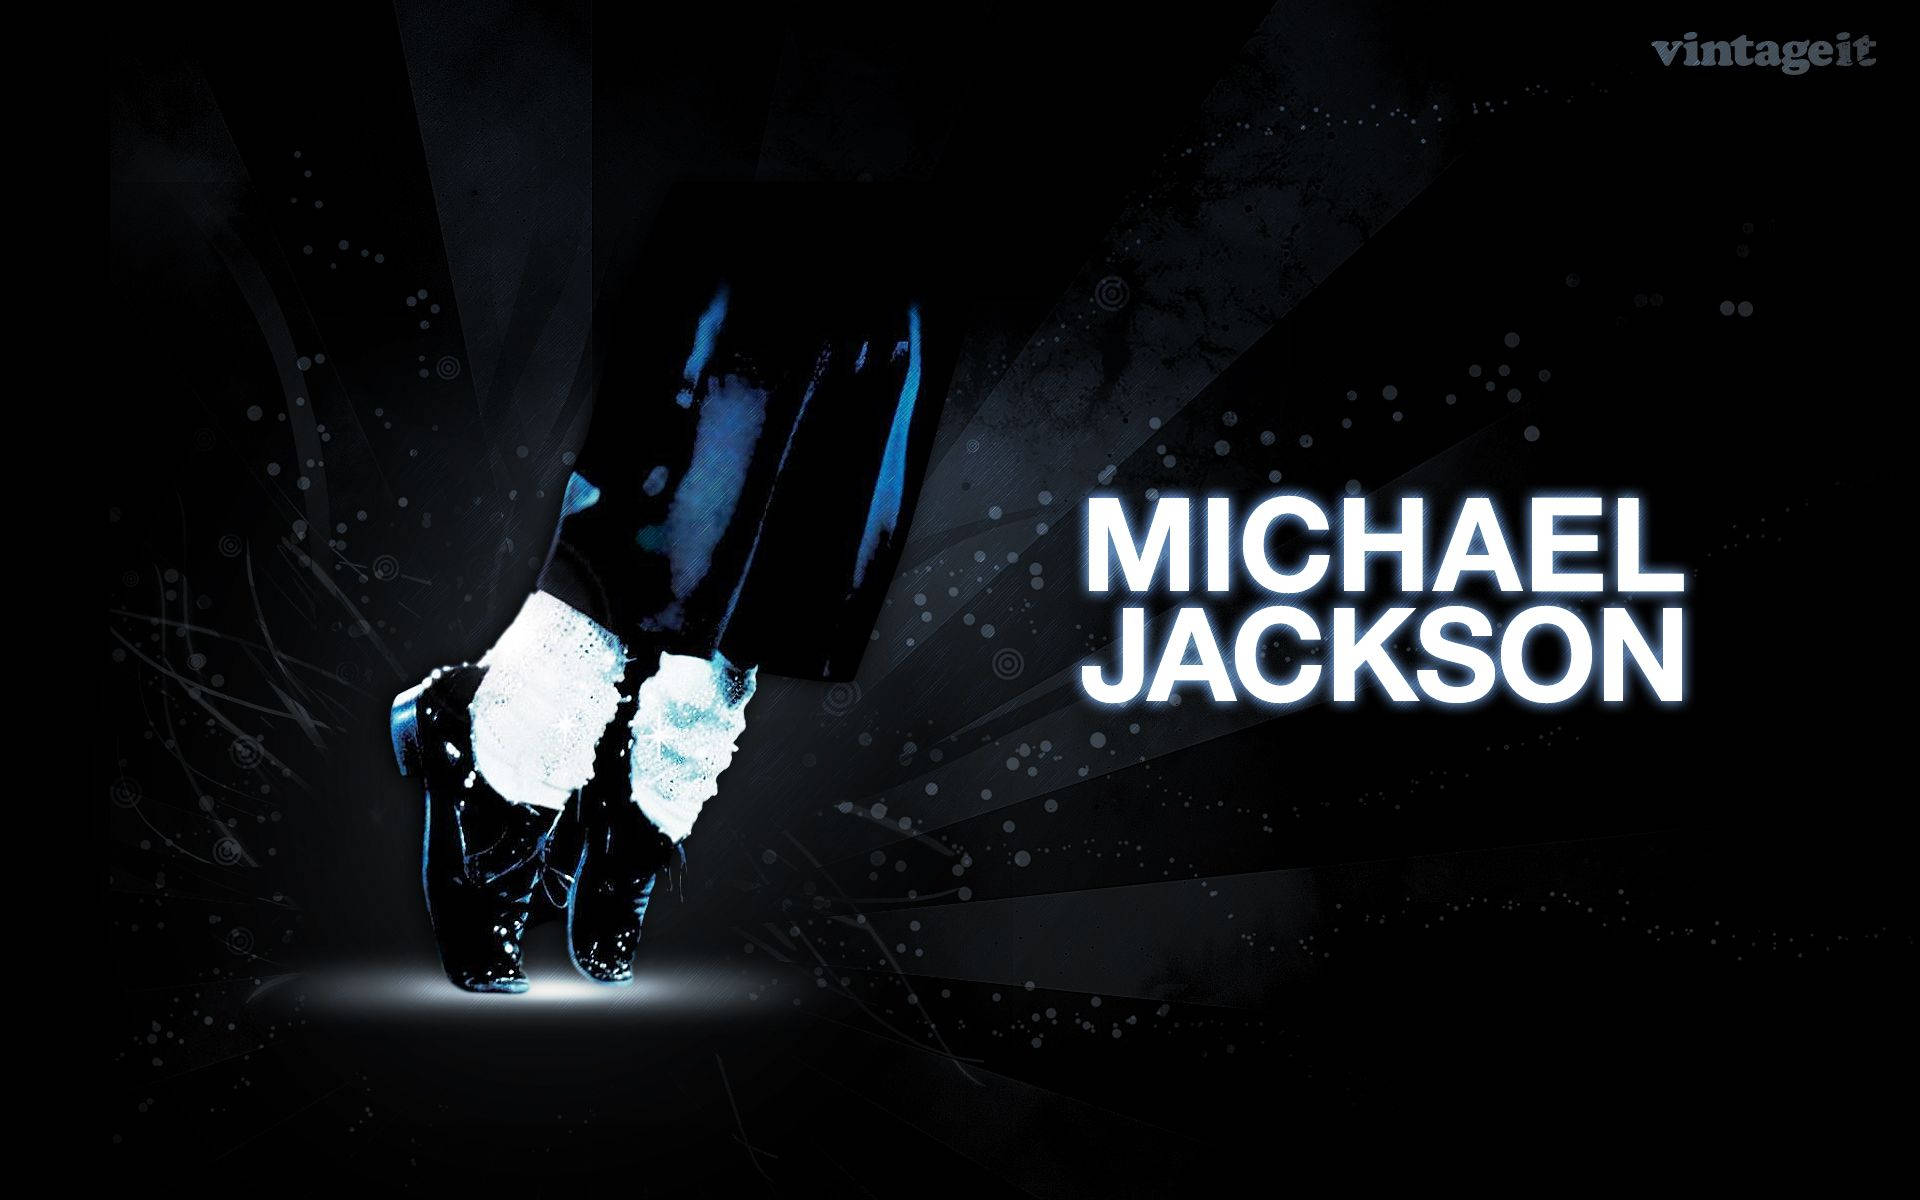 Michael Jackson Digital Art Wallpaper